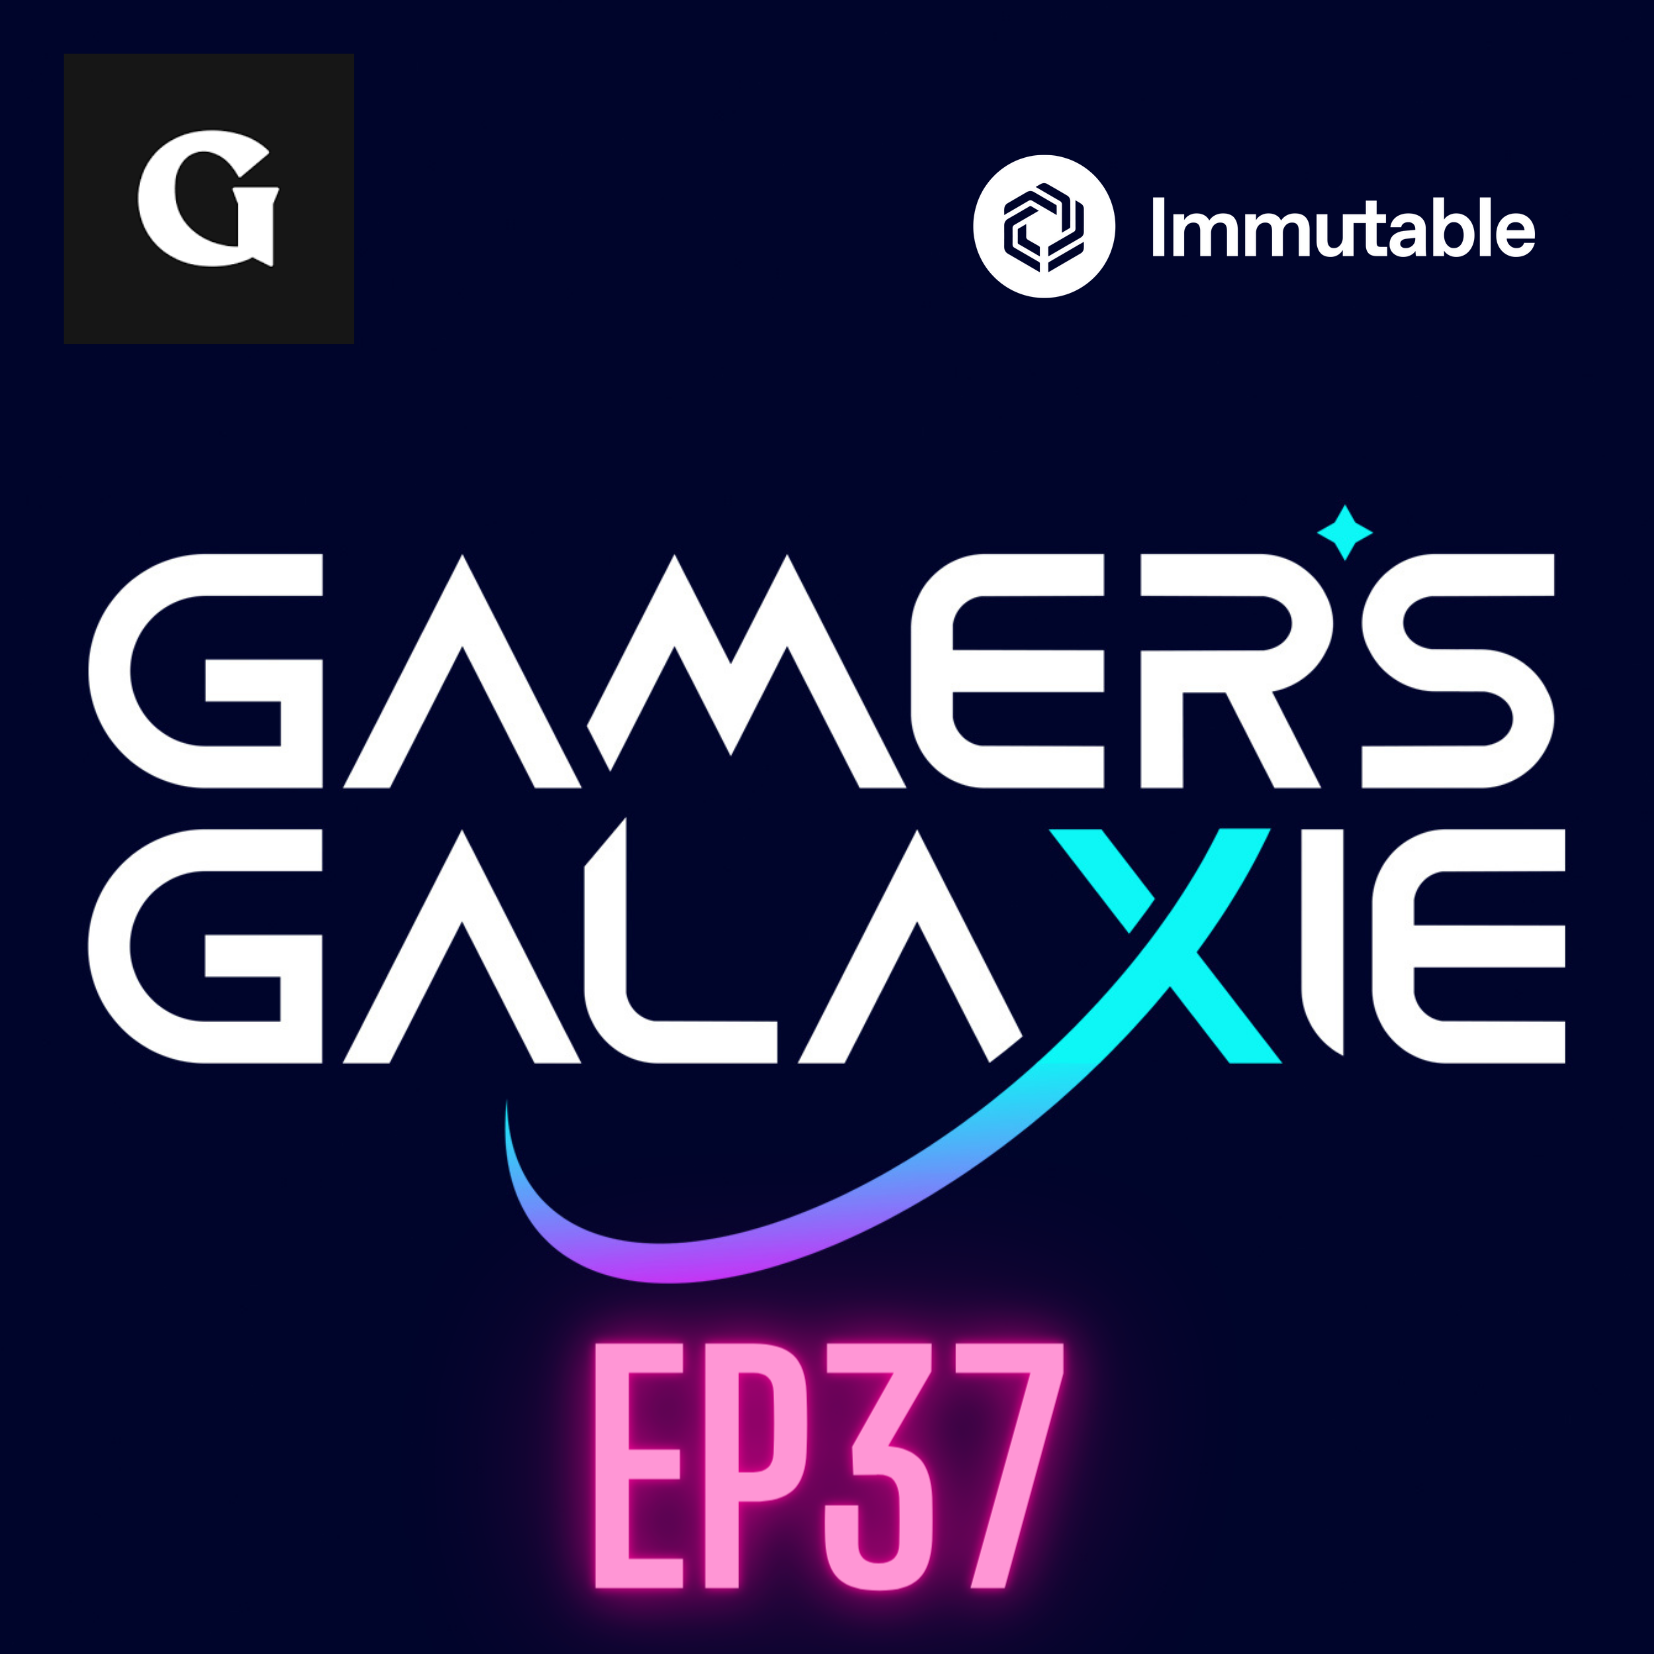 GamersGalaxie EP. 37 - 14 New Games & GoG launch week!